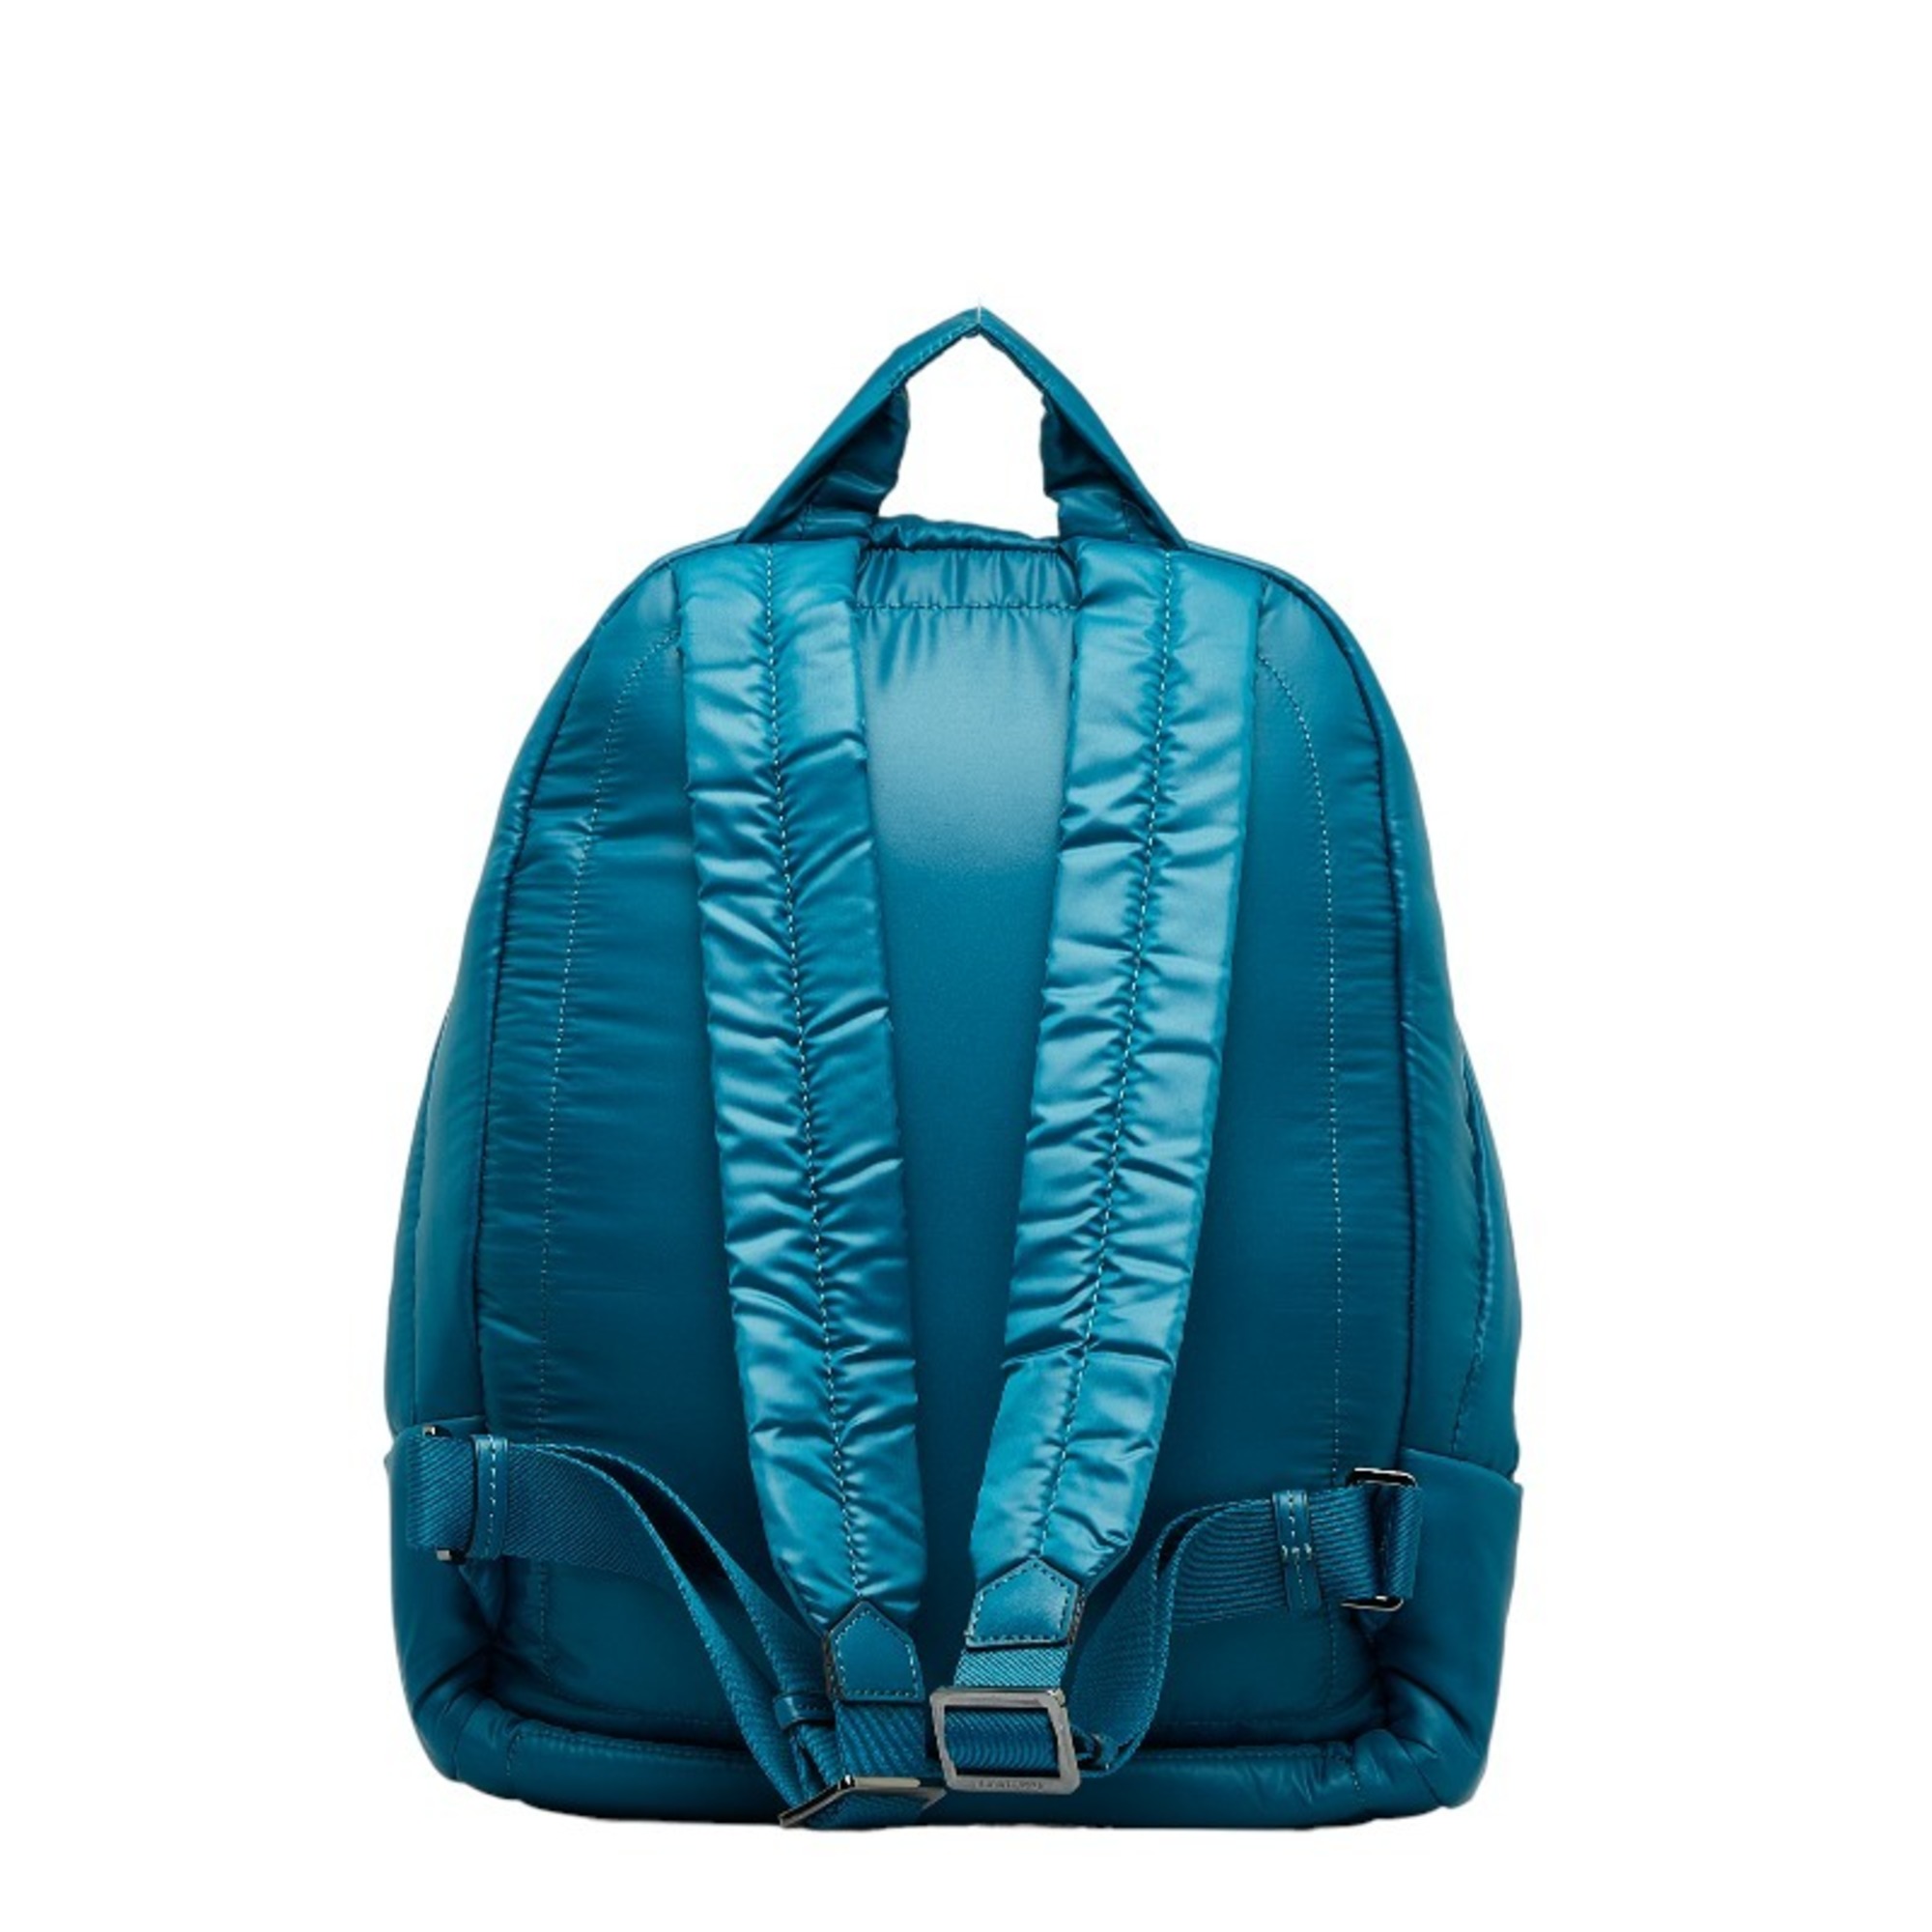 Michael Kors Quilted Backpack Lagoon Blue Nylon Women's